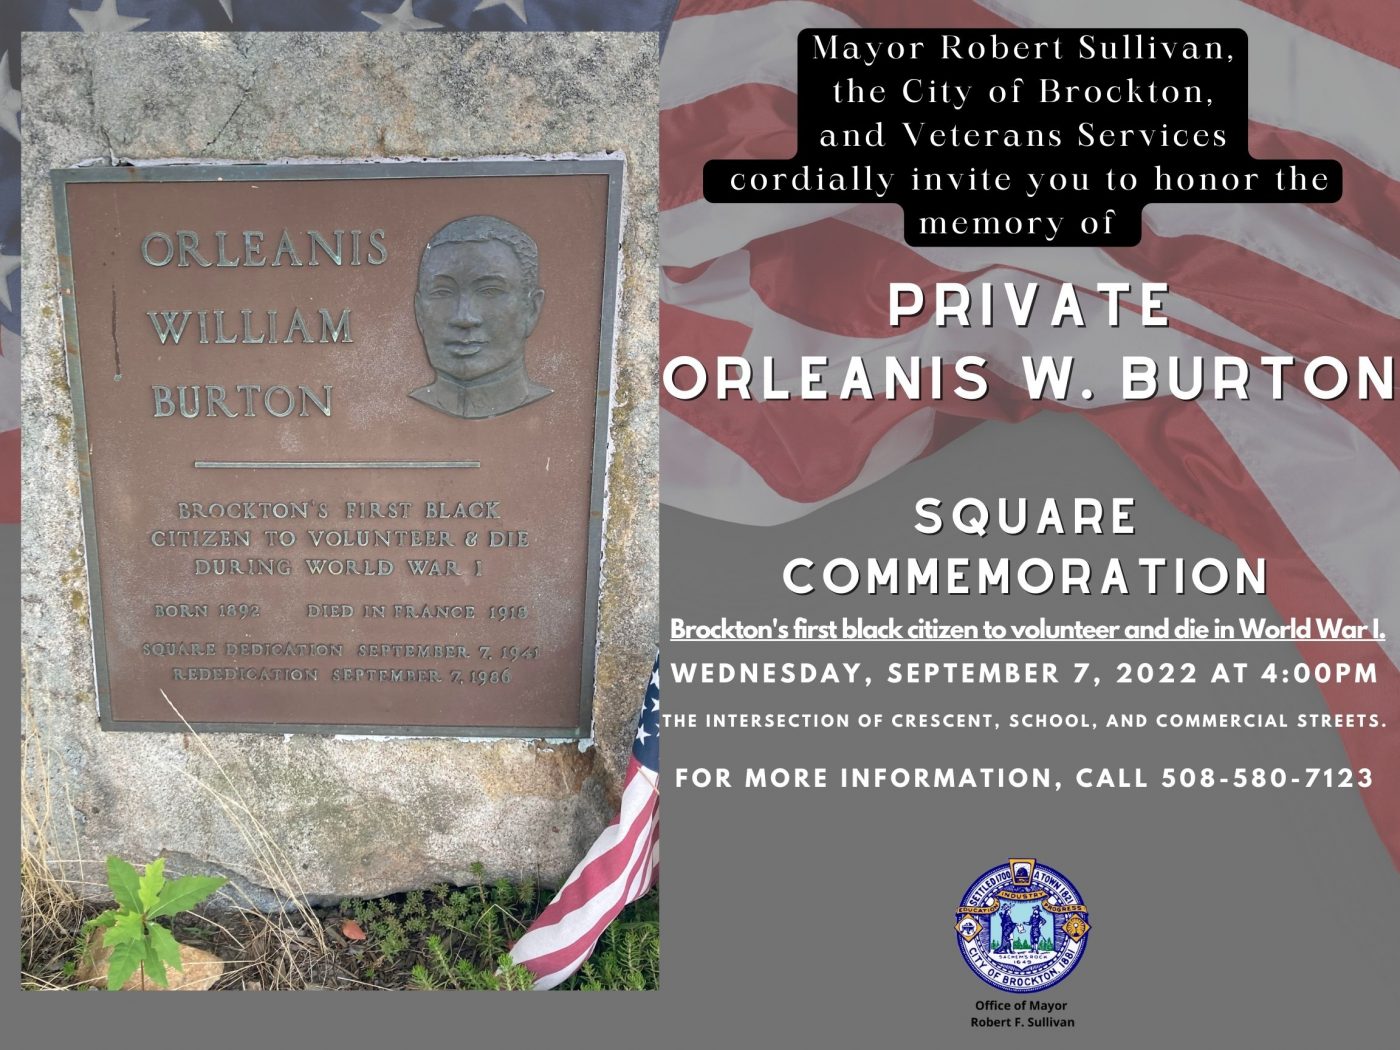 Orleanis Burton Commemorative Square moved to 4PM